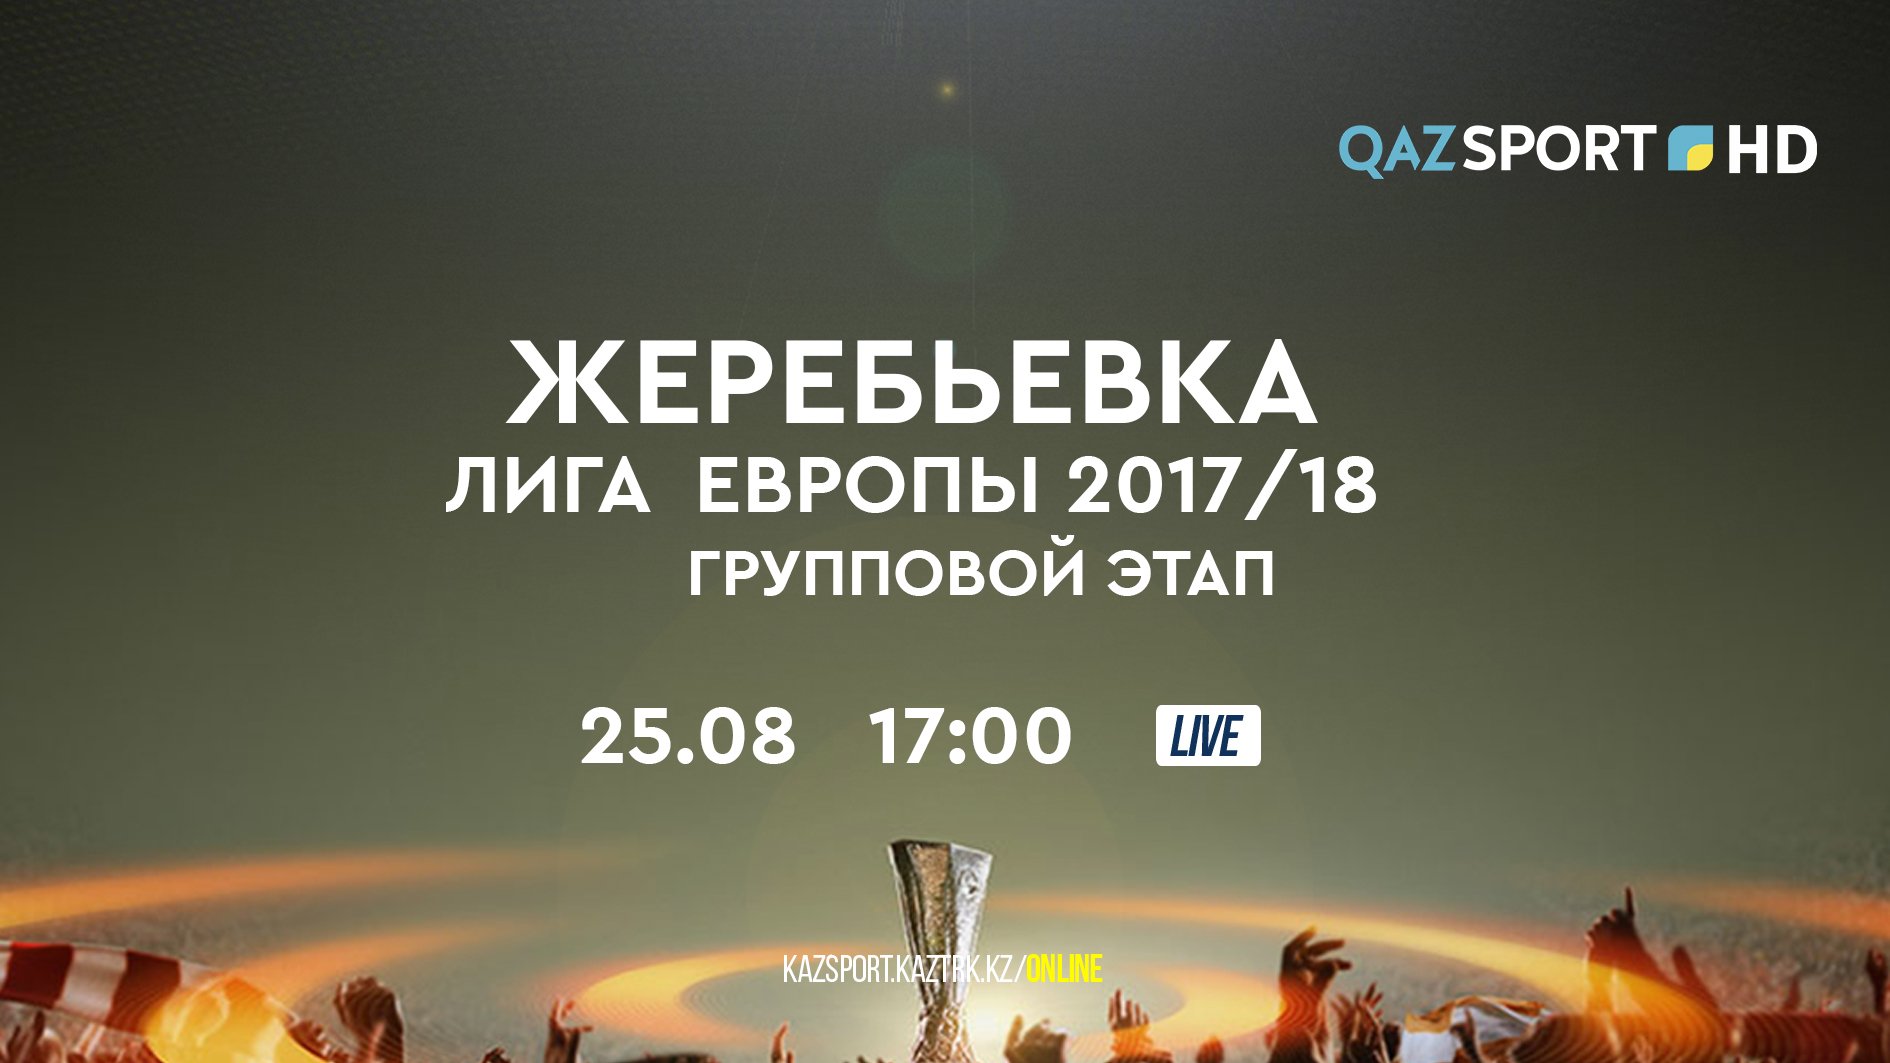 qazsport live stream